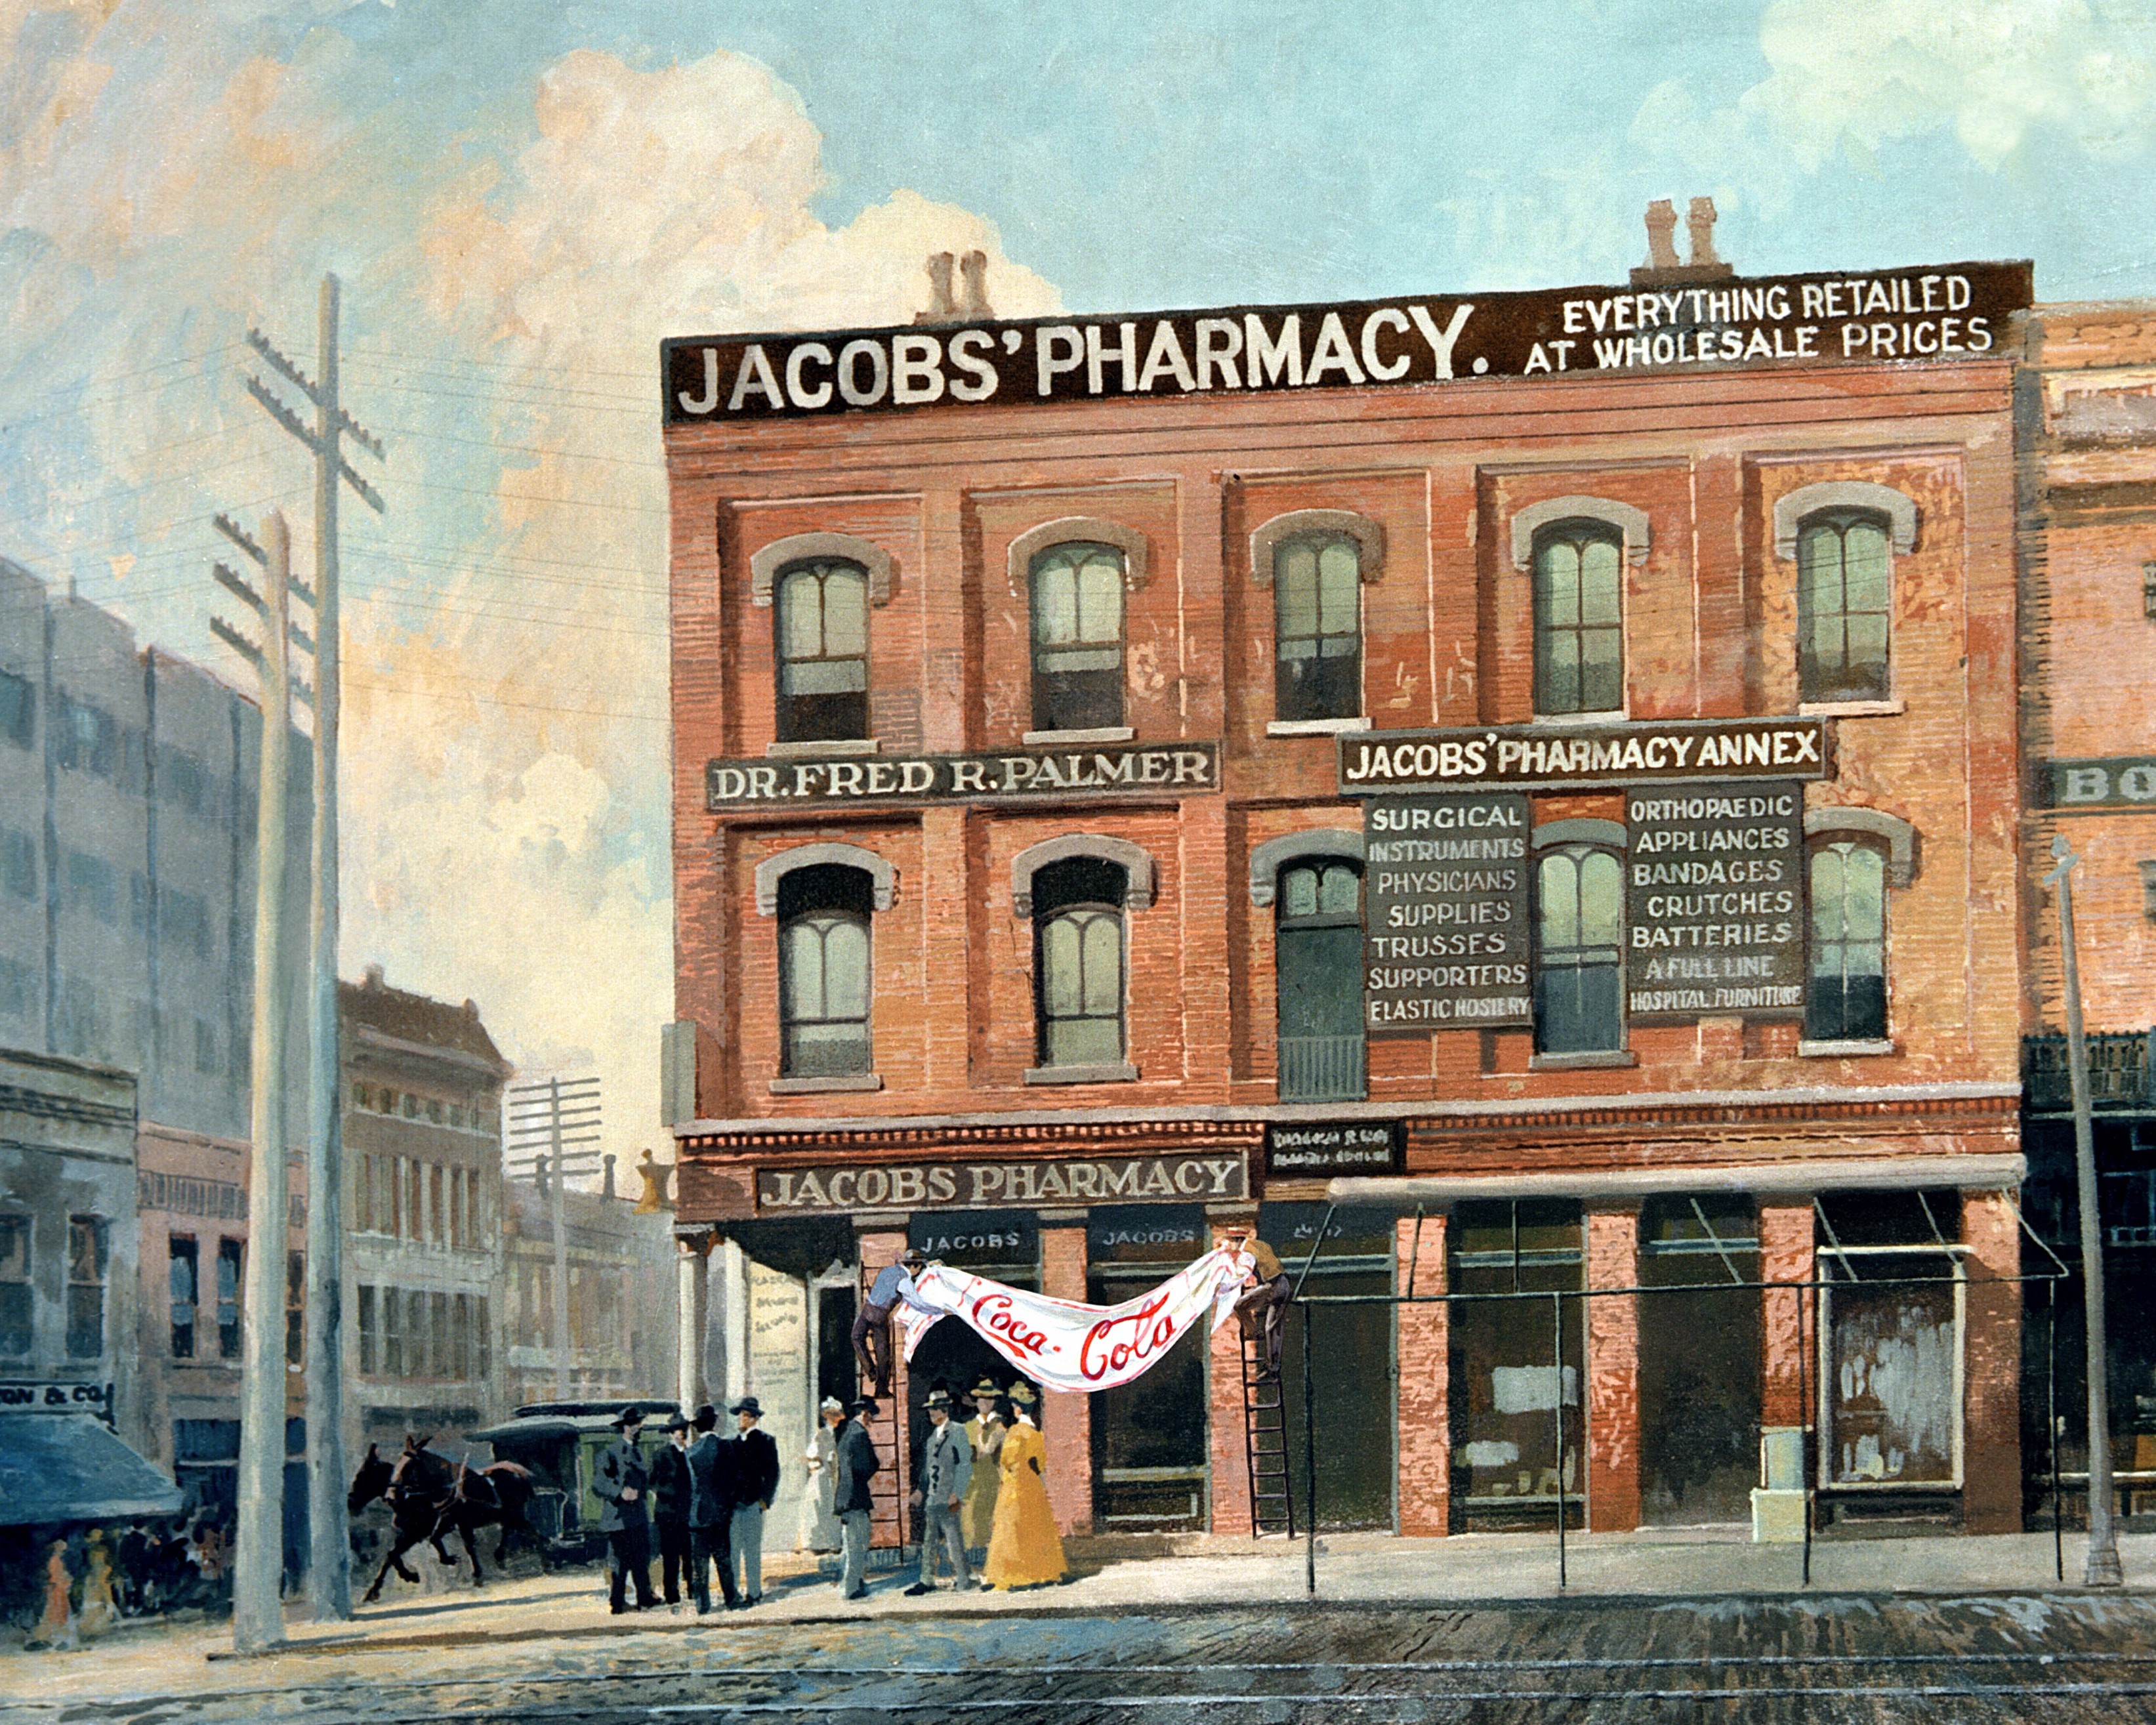 BRAND HISTORY In 1886, Dr. John Pemberton (Pharmacist) created a